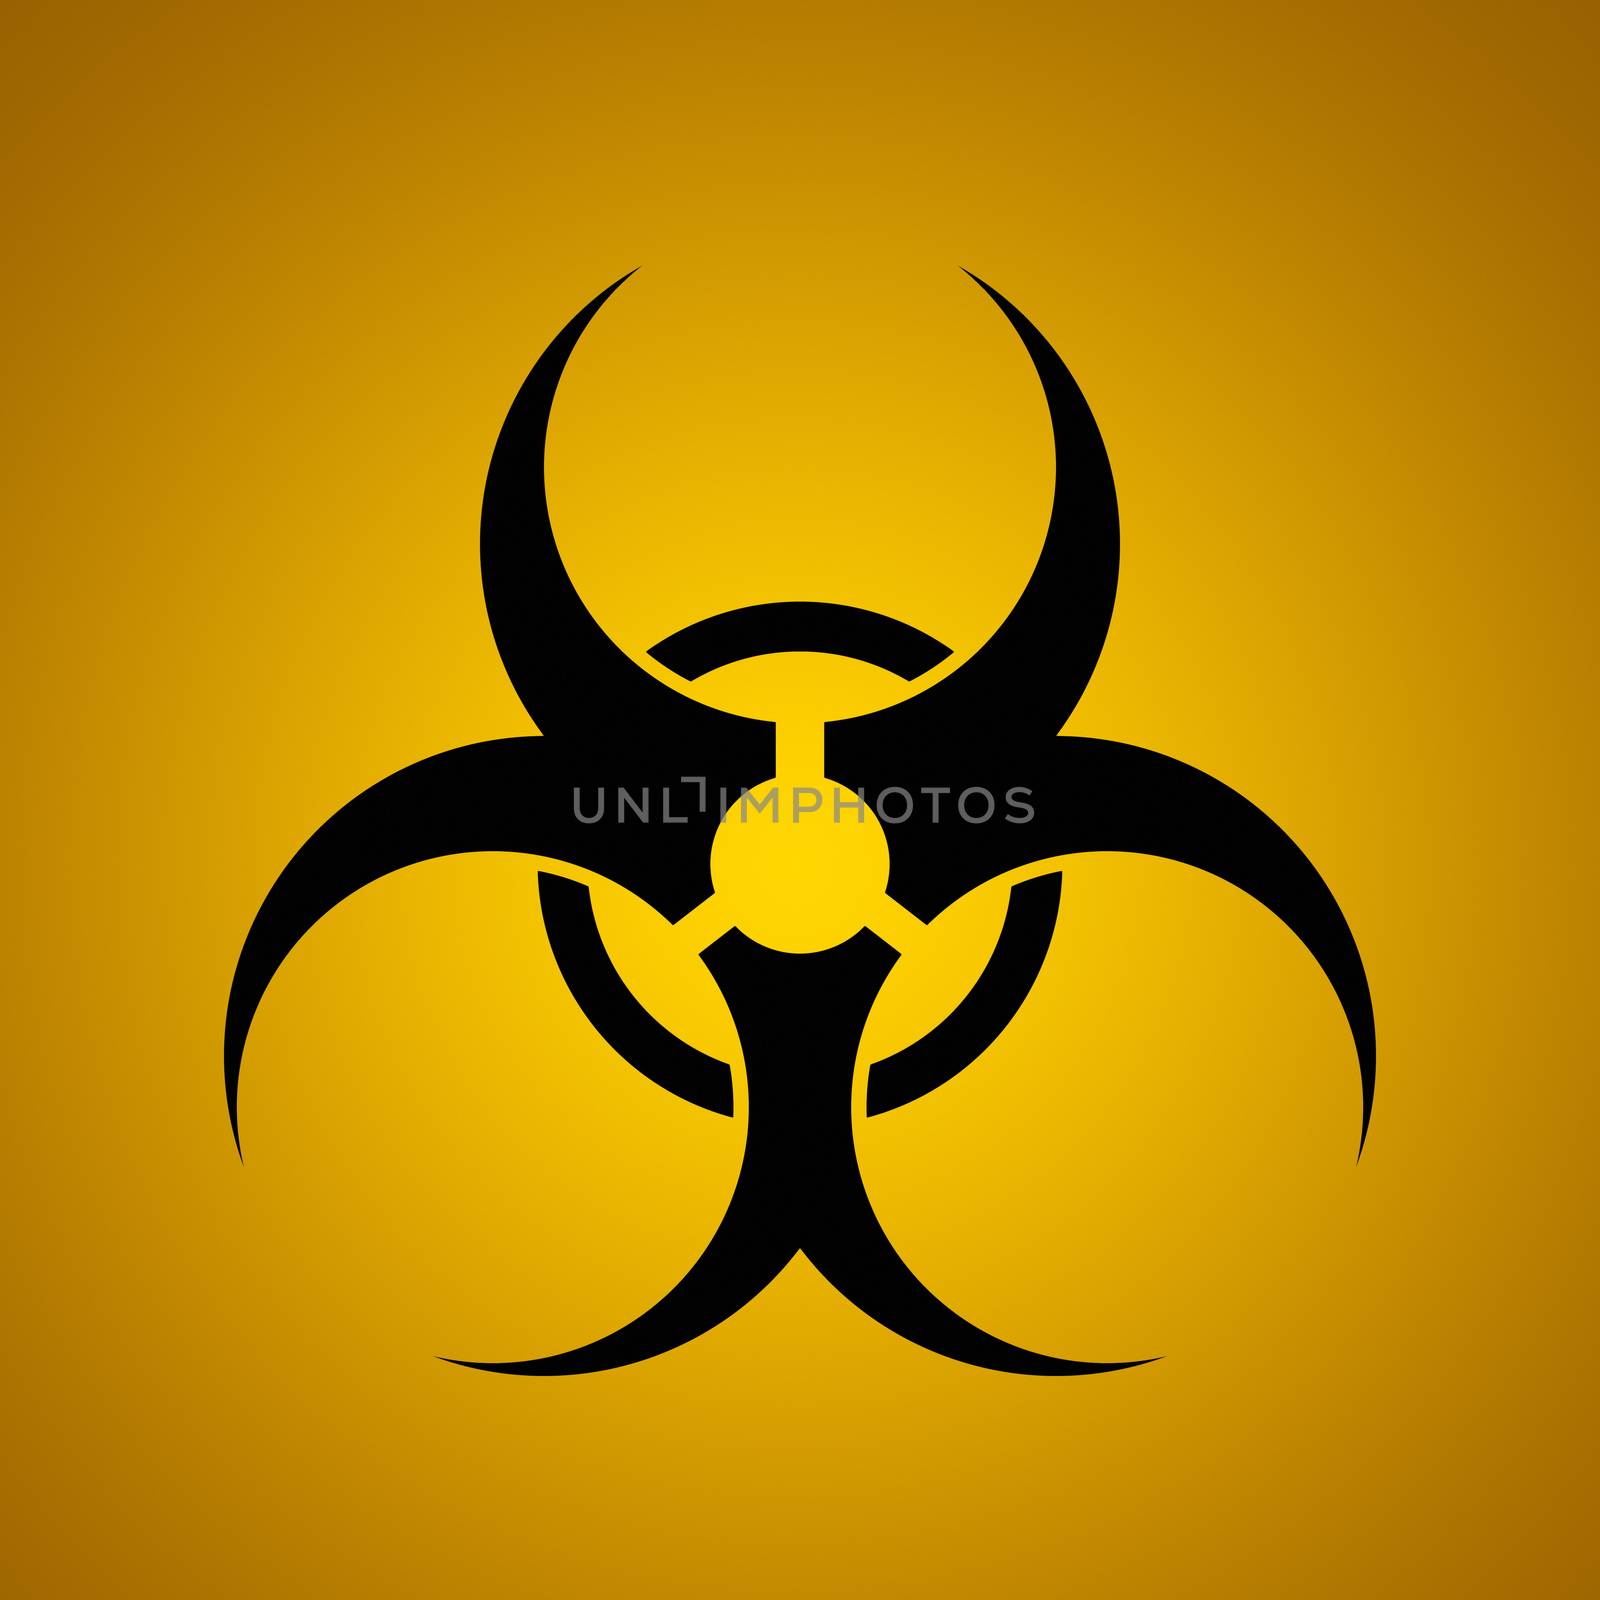 Illustration of a typical biohazard sign symbol